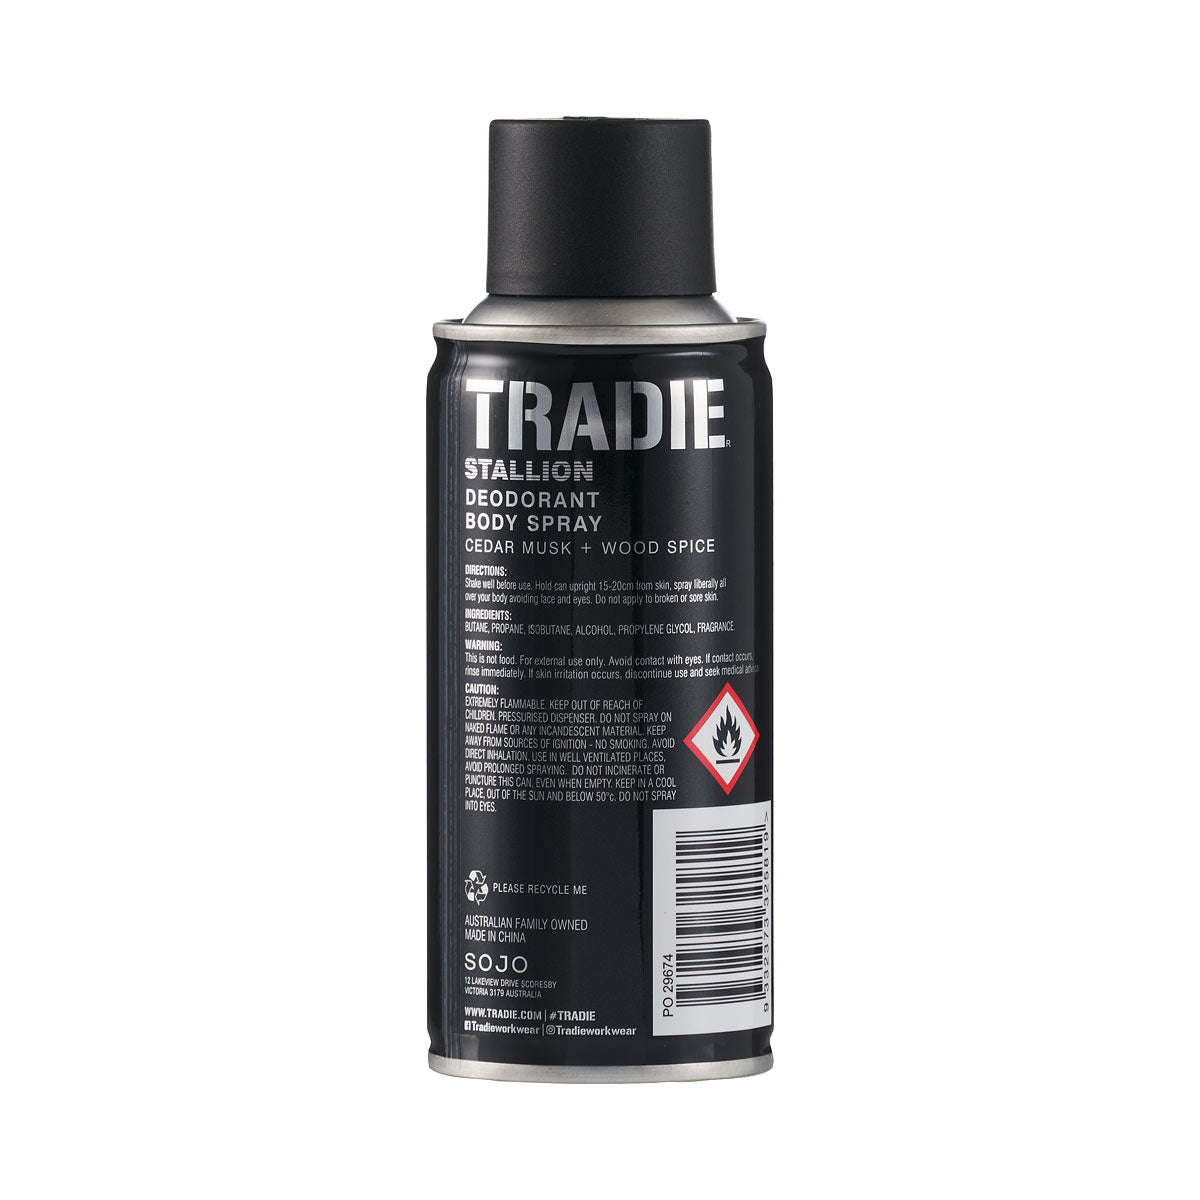 Tradie Deodorant Stallion 160mL – The Reject Shop